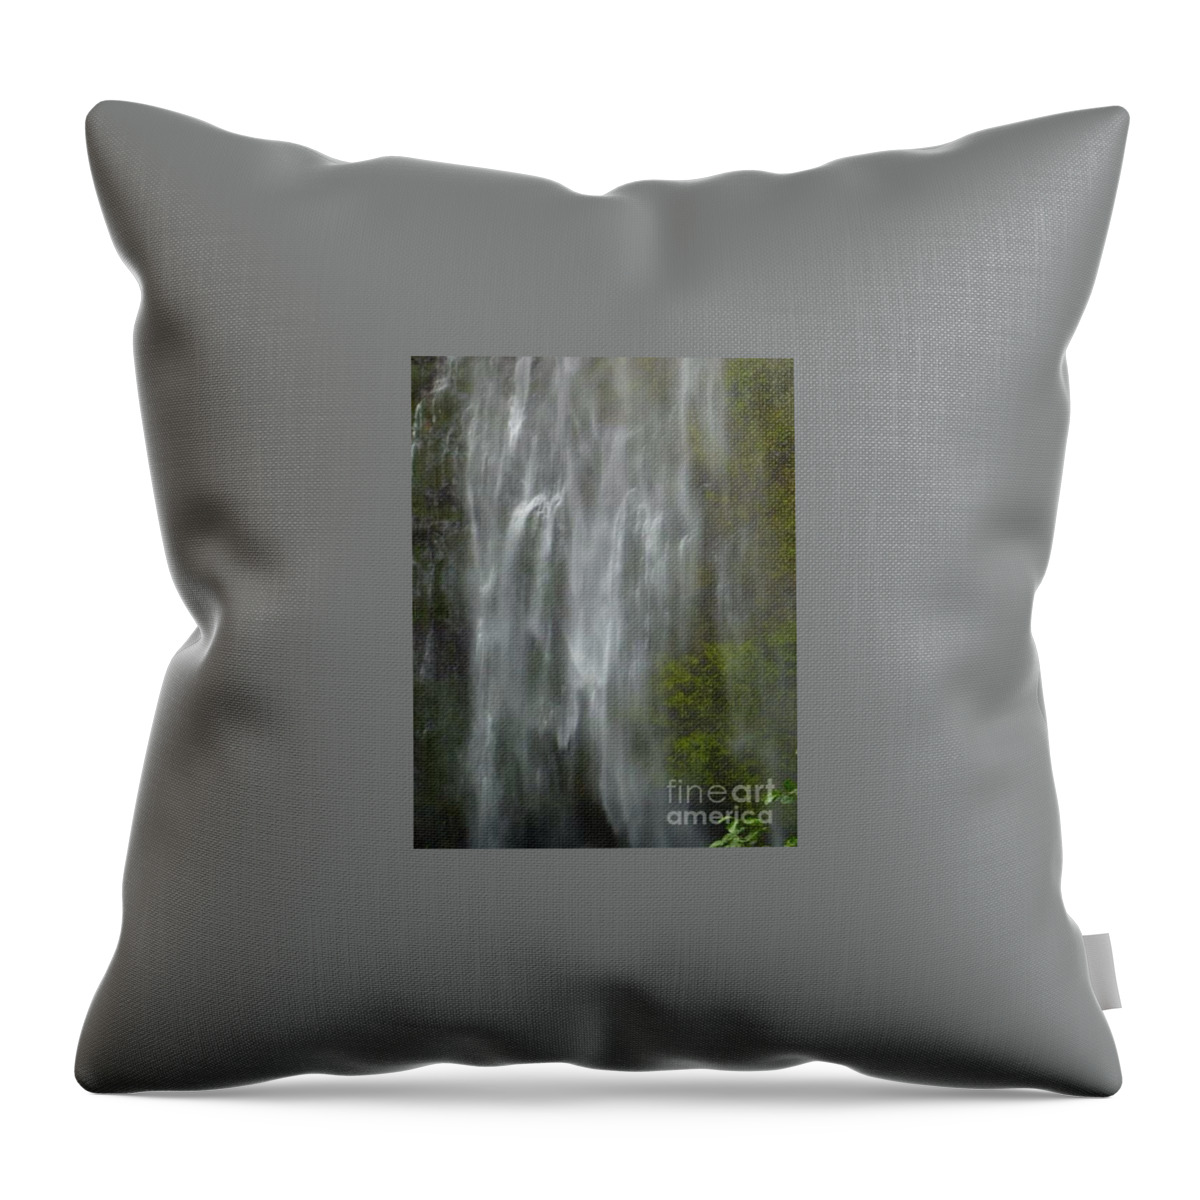 Water Fall Throw Pillow featuring the photograph Water Fall Dream by Susan Garren